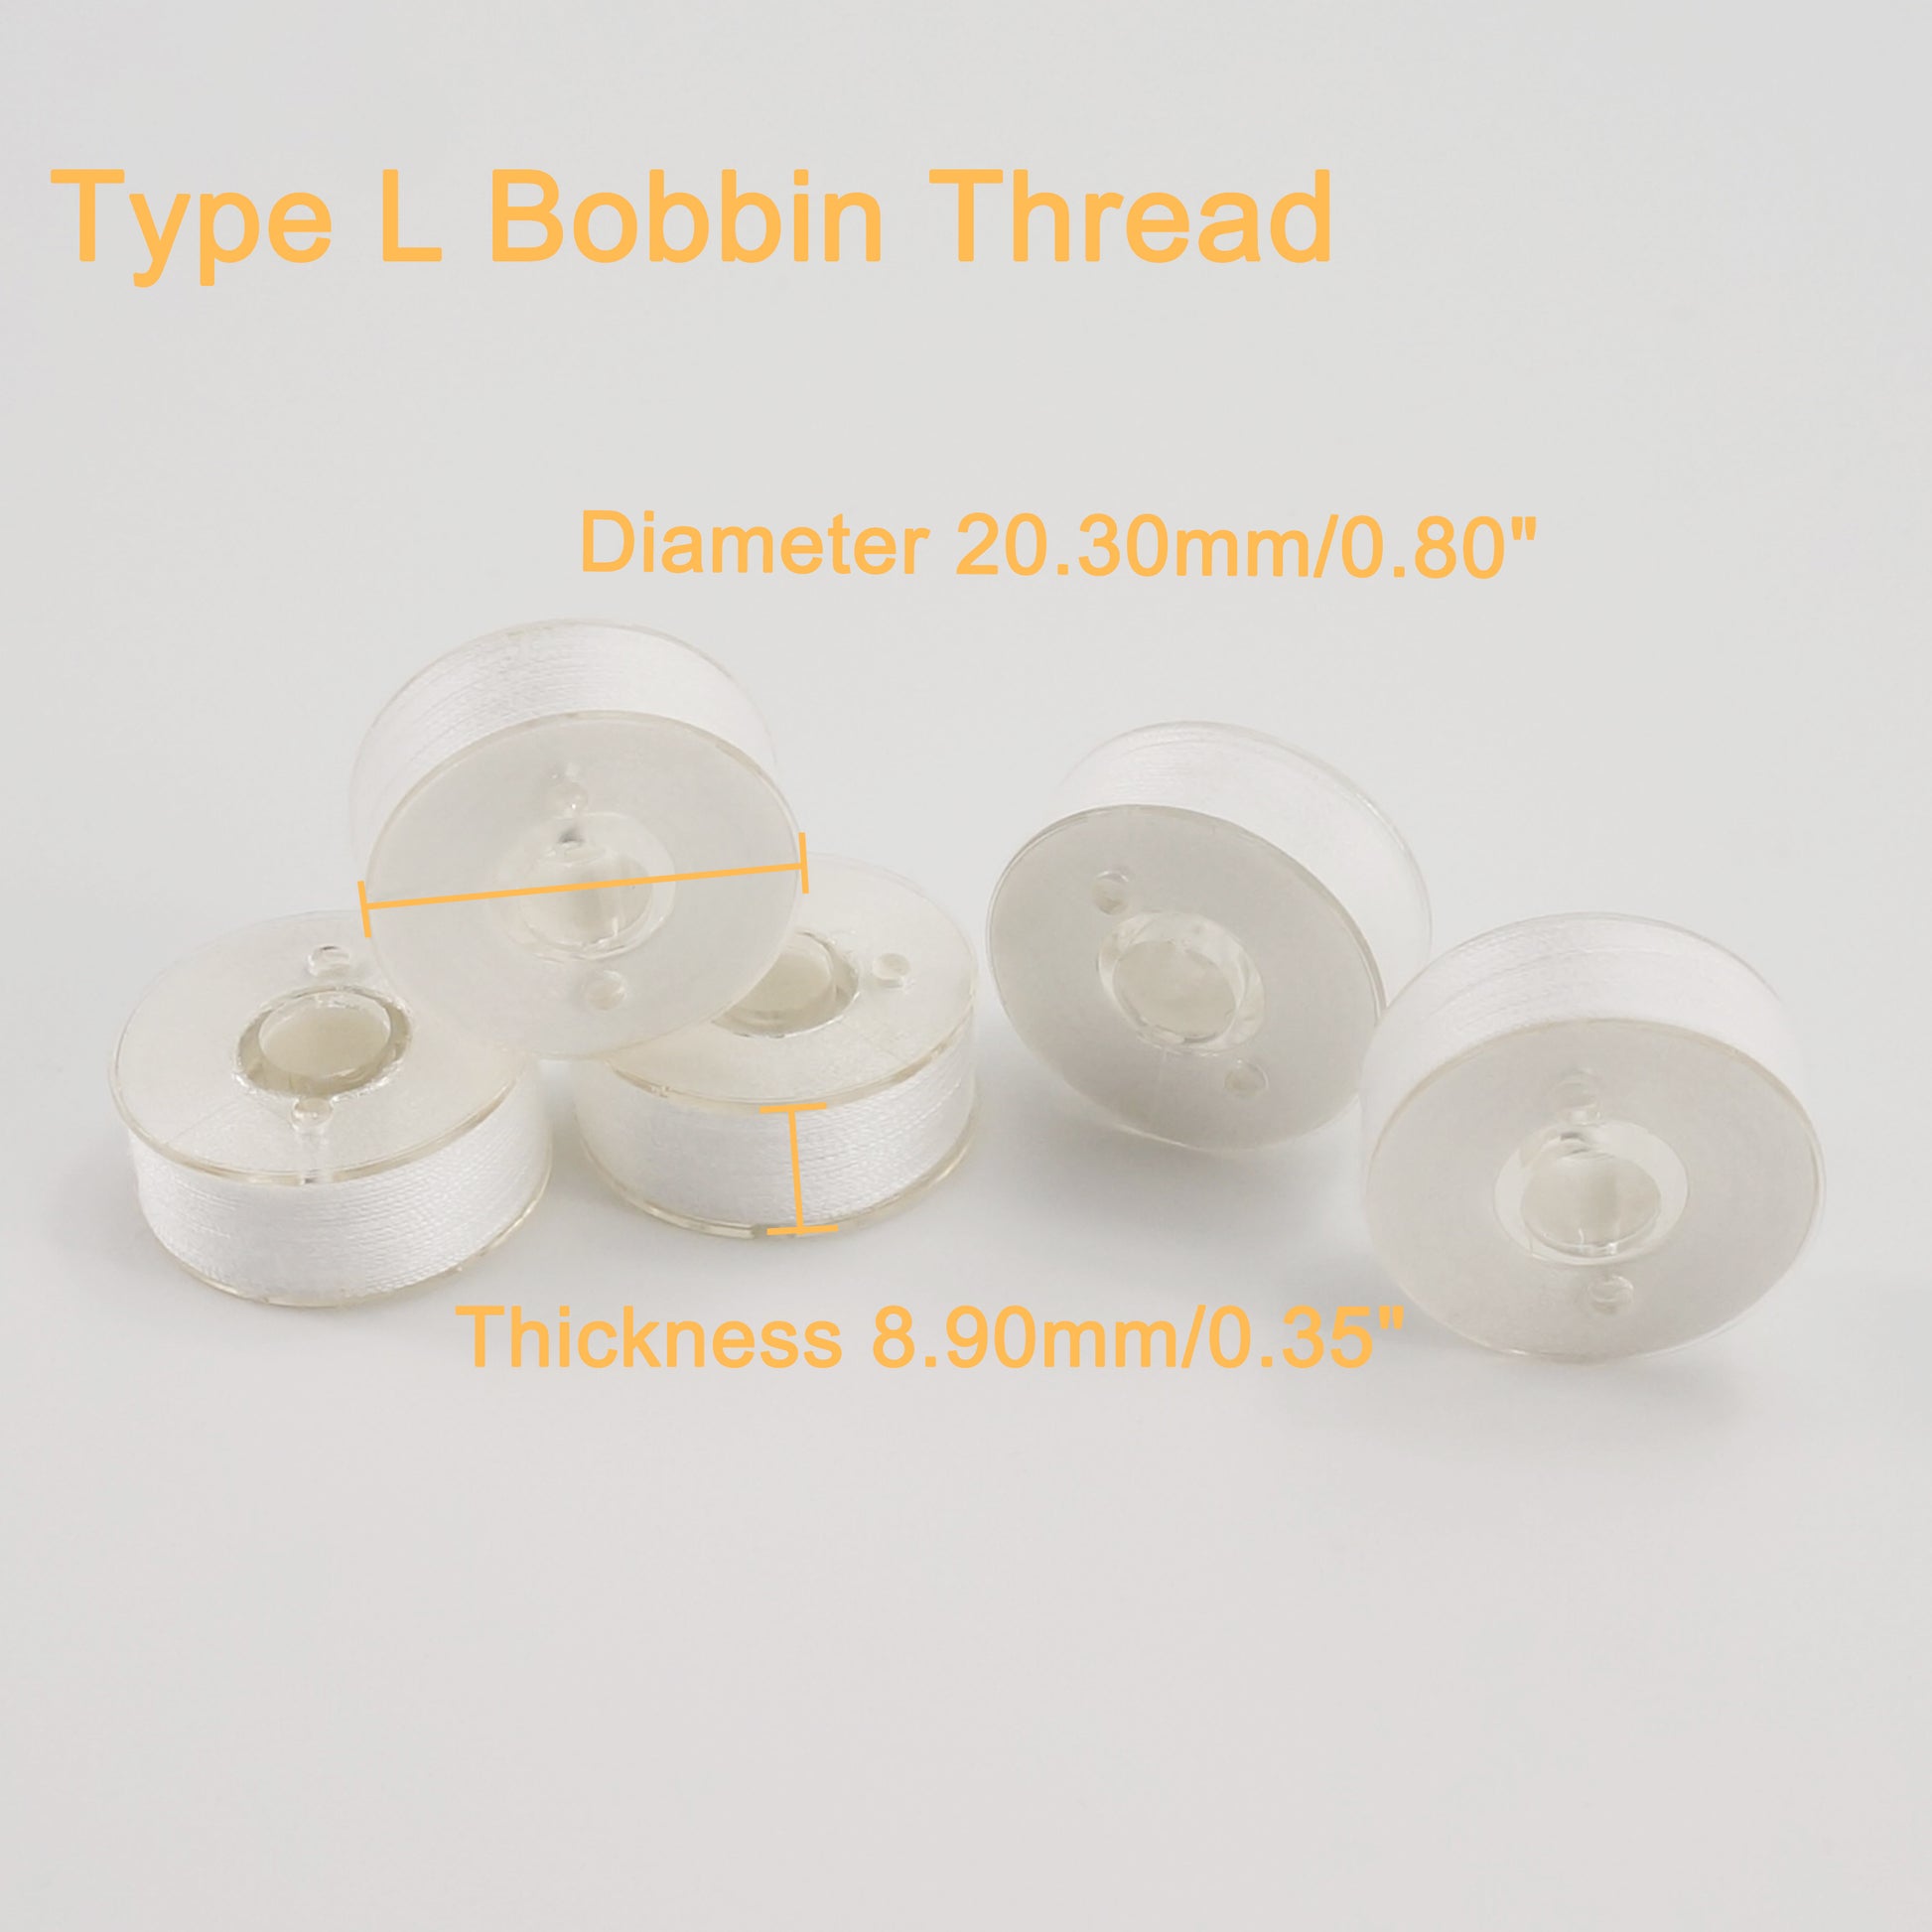 New brothread 25pcs 70D/2 (60WT) Prewound Bobbin Thread Plastic Size A